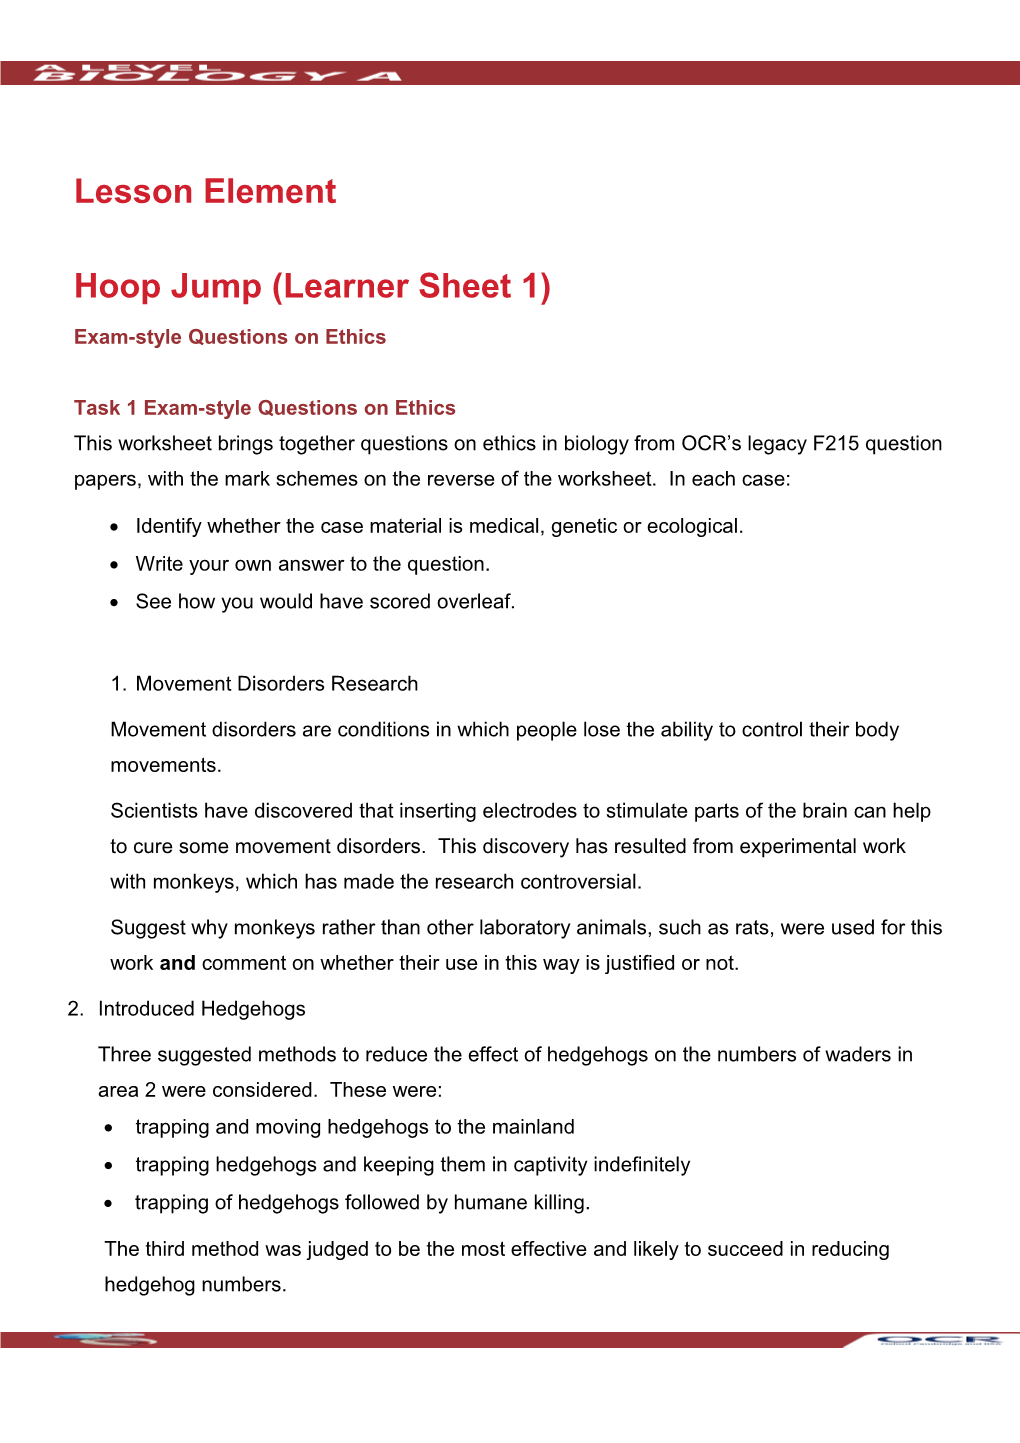 A Level Biology B Lesson Element (Hoop Jump Learner Sheet 1)